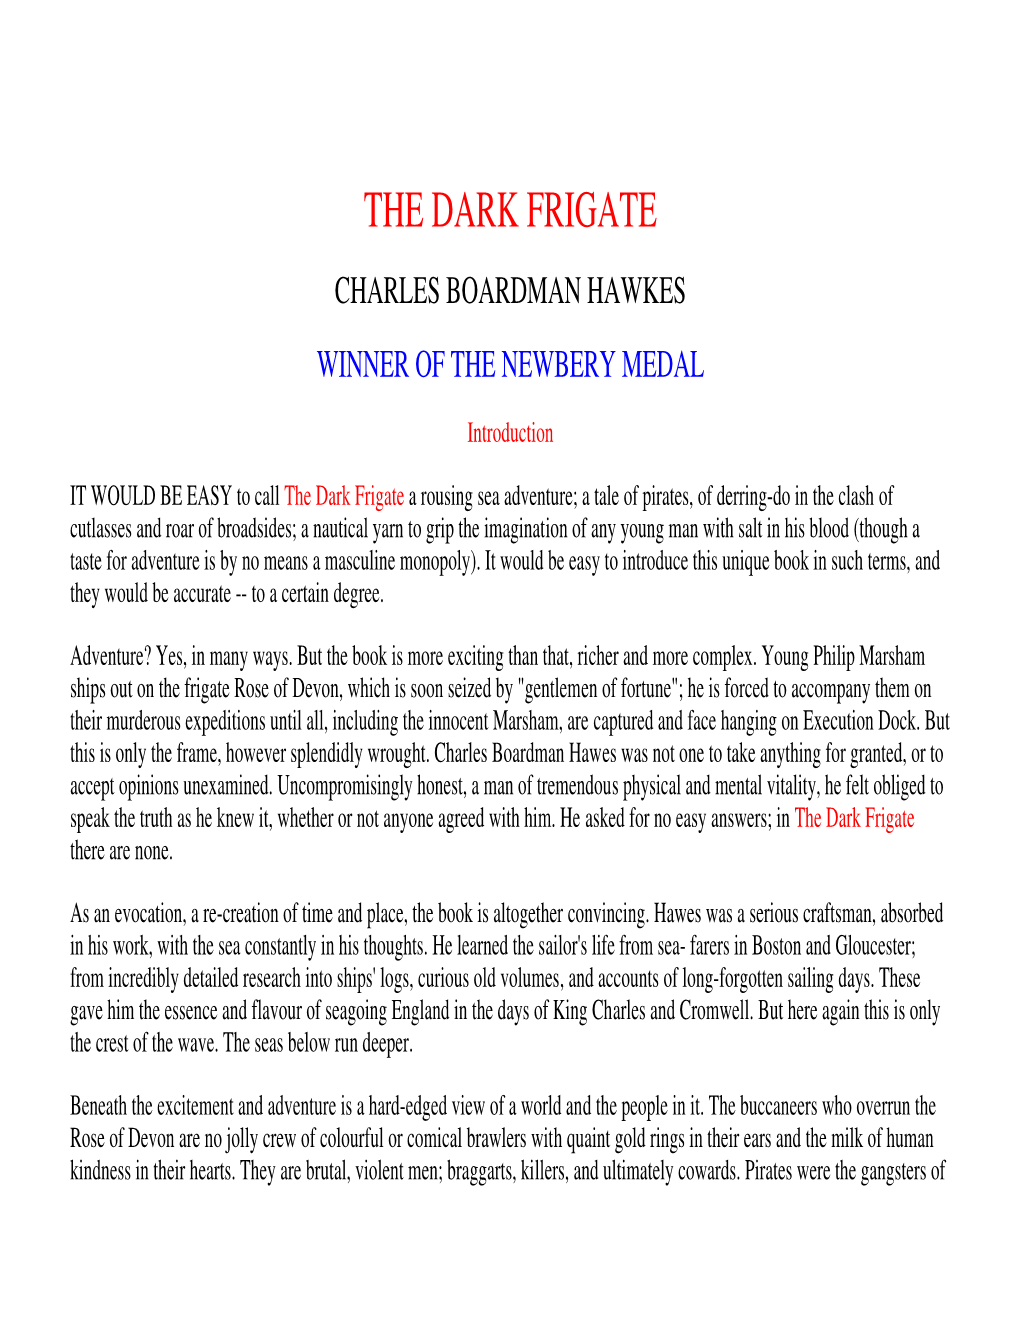 The Dark Frigate Charles Boardman Hawkes Winner of the Newbery Medal